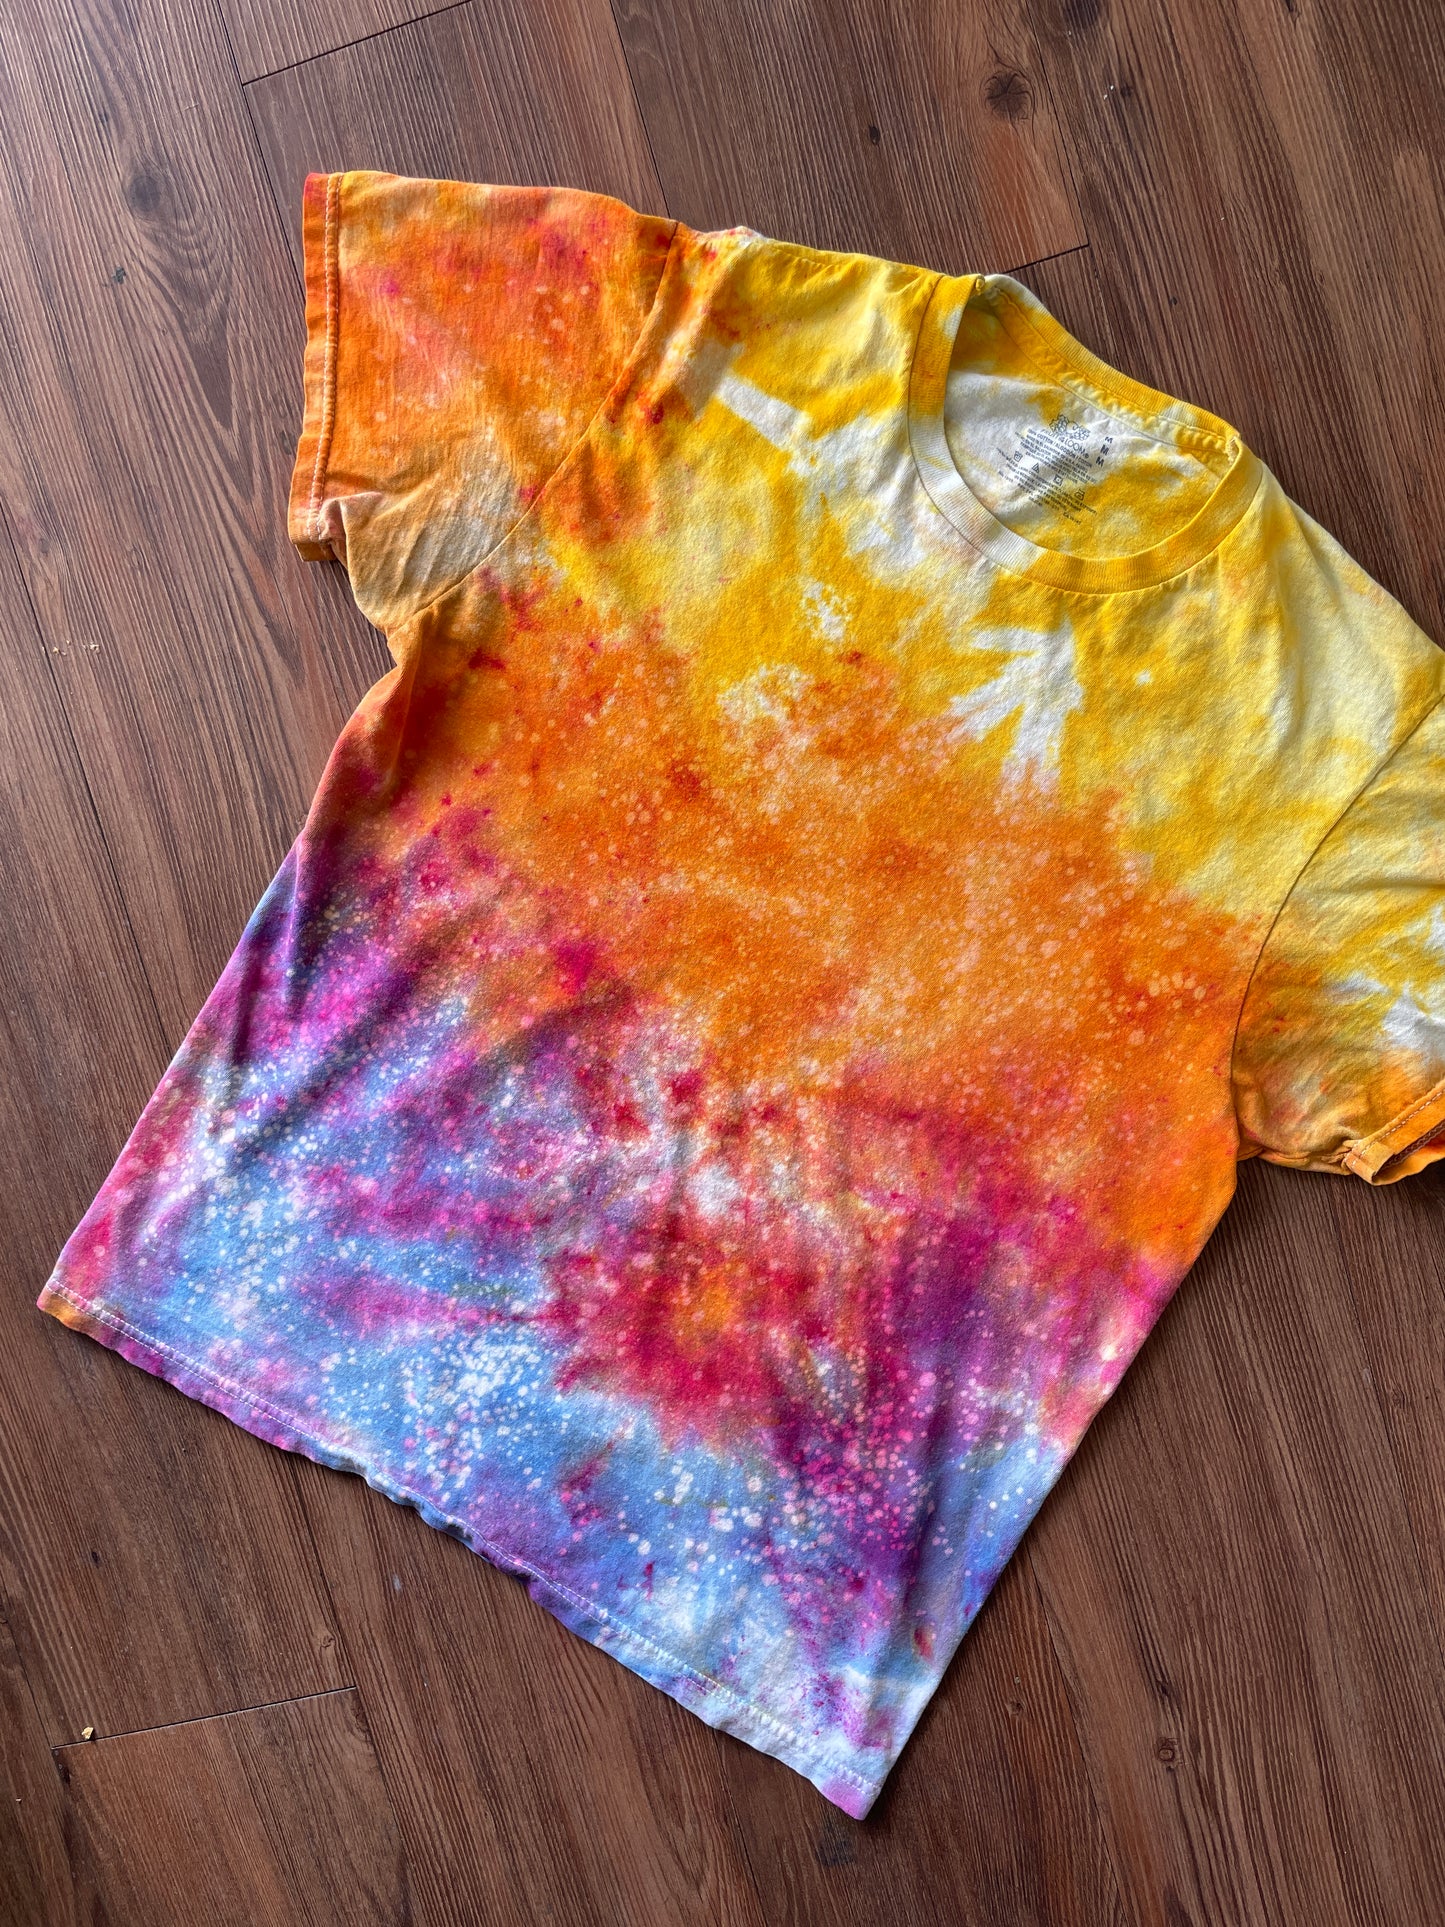 MEDIUM Men's Sunrise Galaxy Tie Dye T-Shirt | Blue, Pink and Yellow Ice Dye Short Sleeve